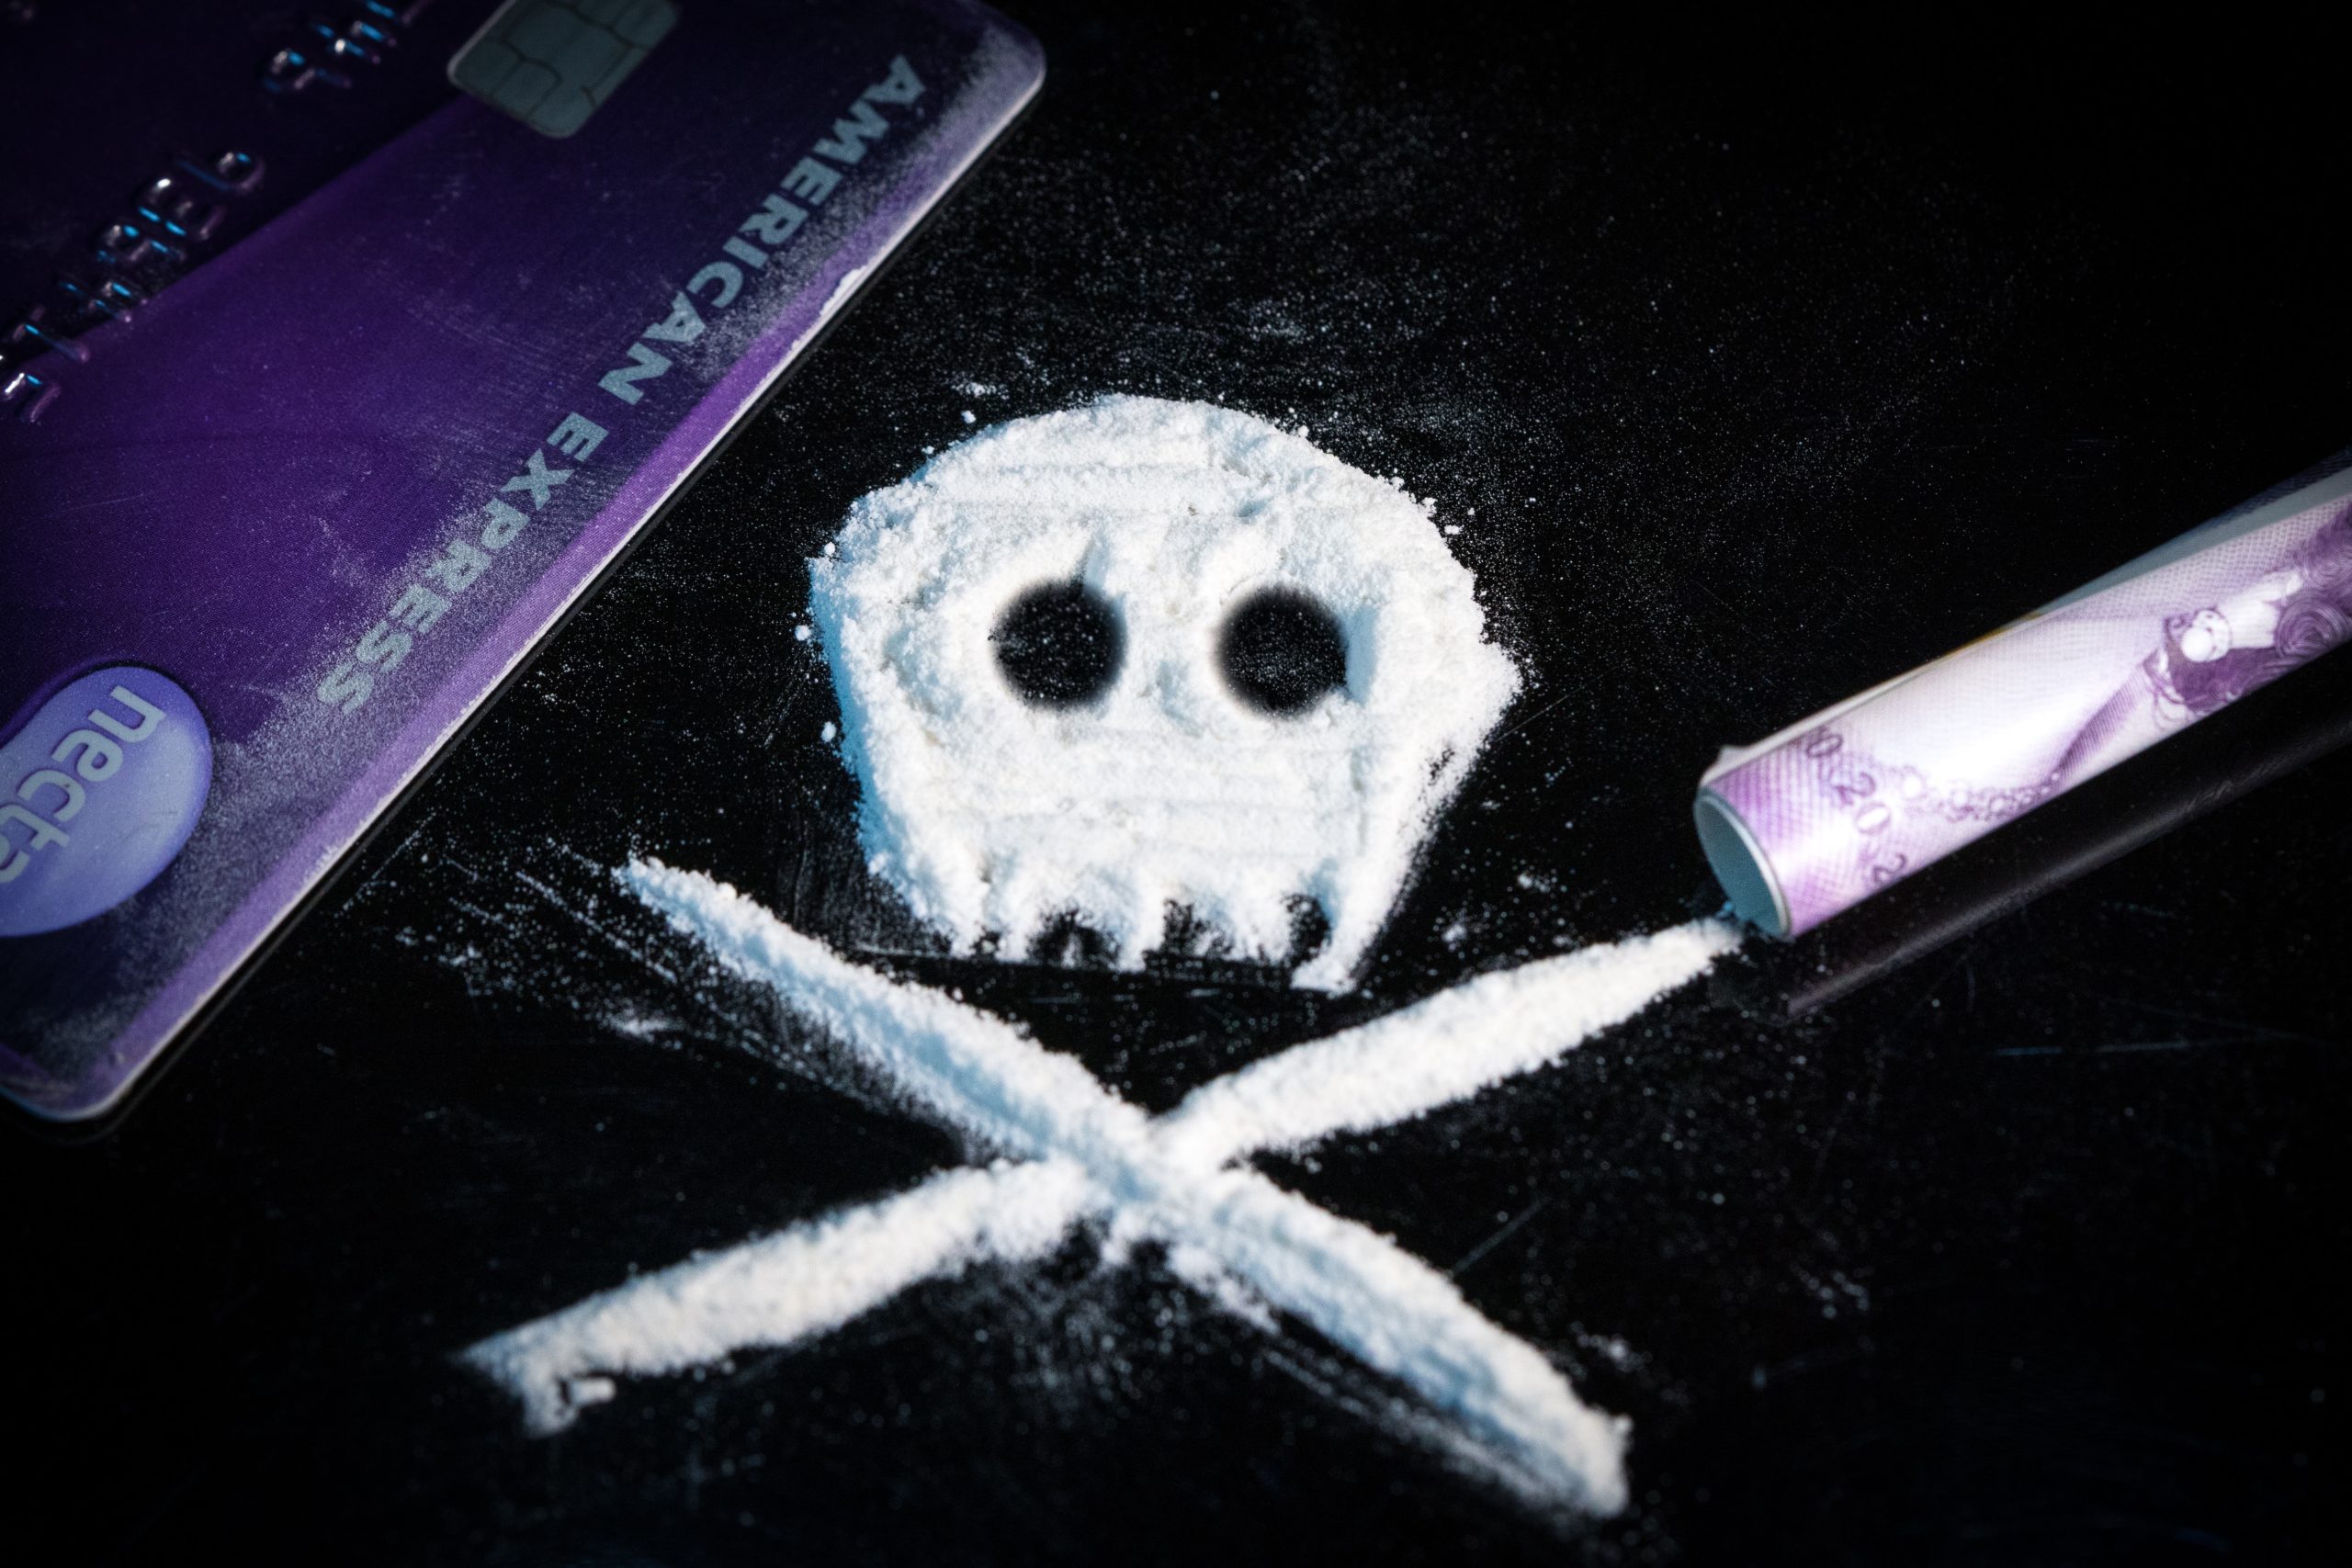 Cocaine Overdose